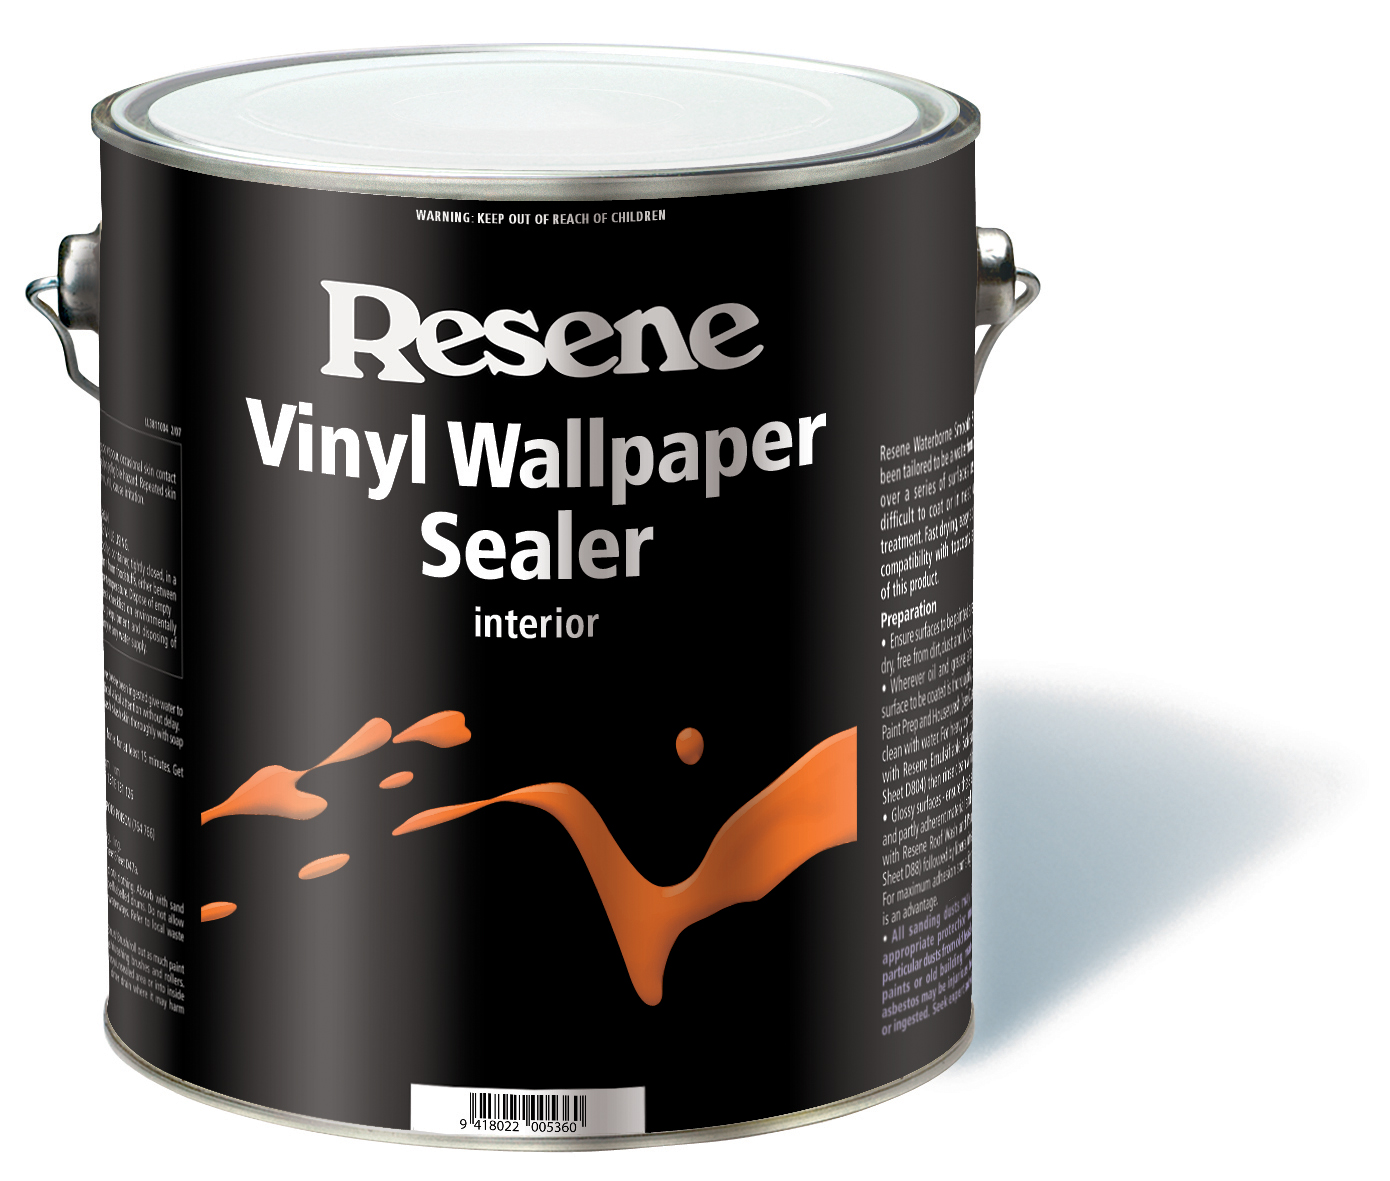 Resene Vinyl Wallpaper Sealer Price The Best HD